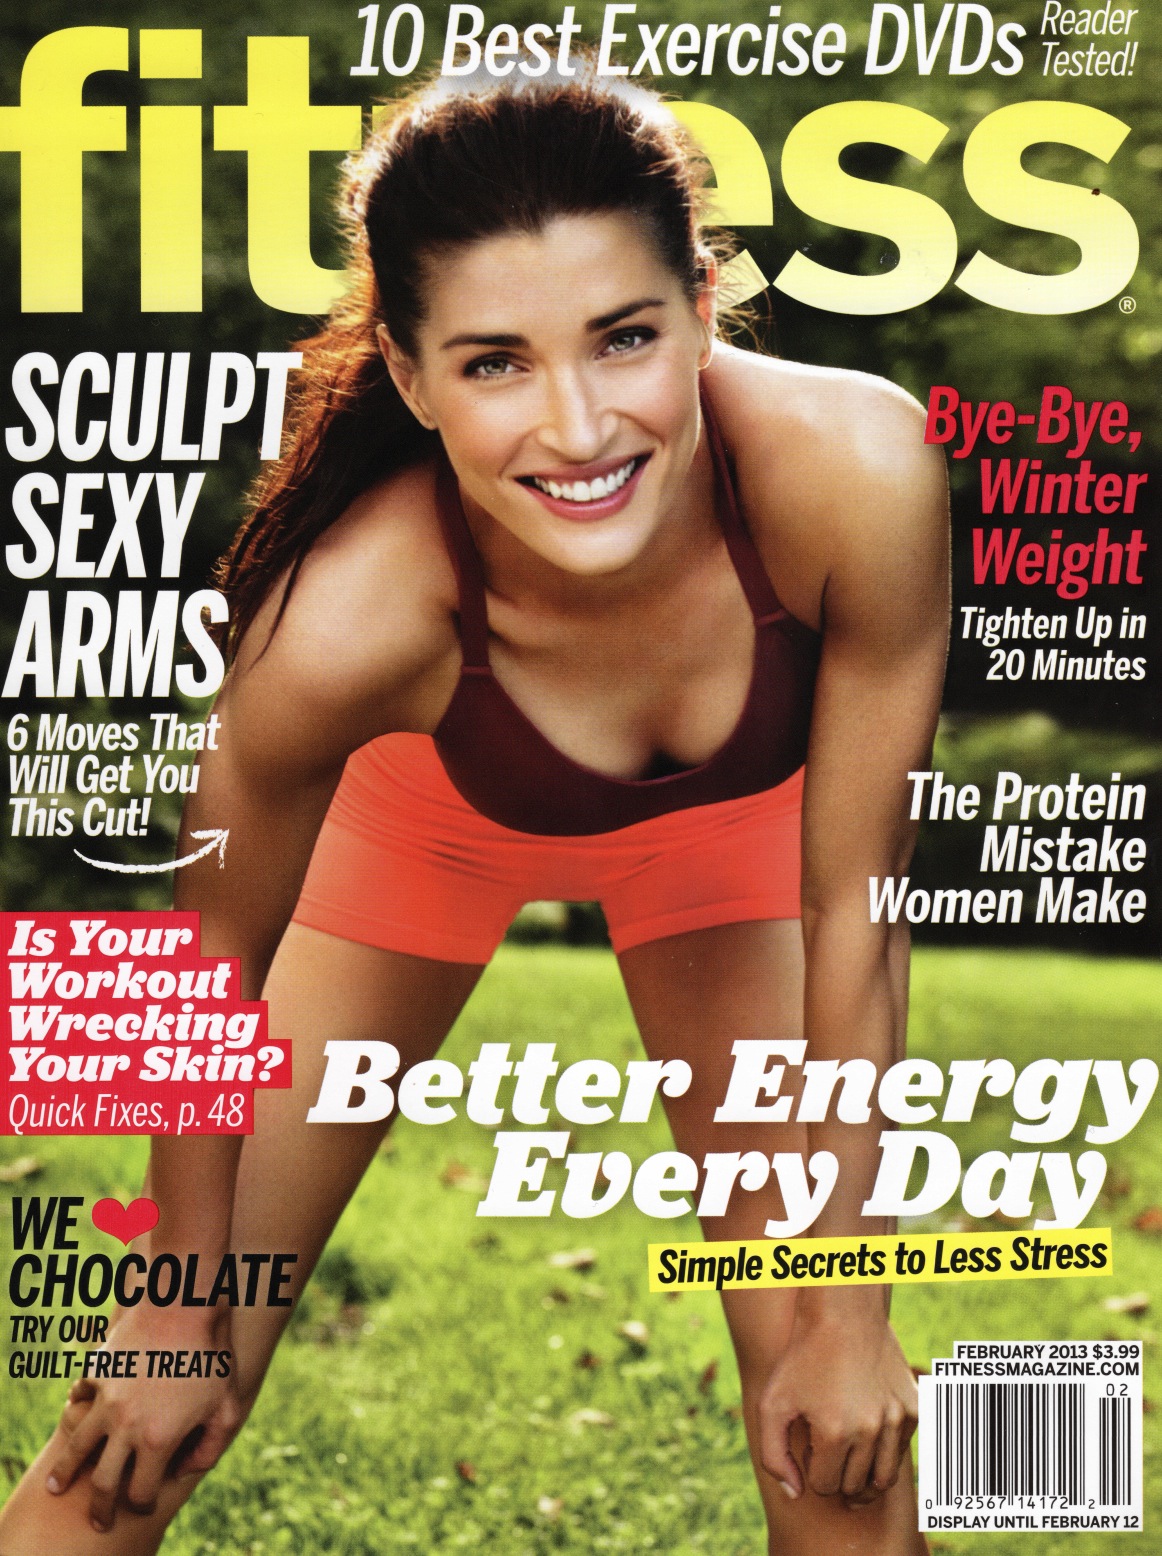 Fitness Magazine Spotlight on barre3